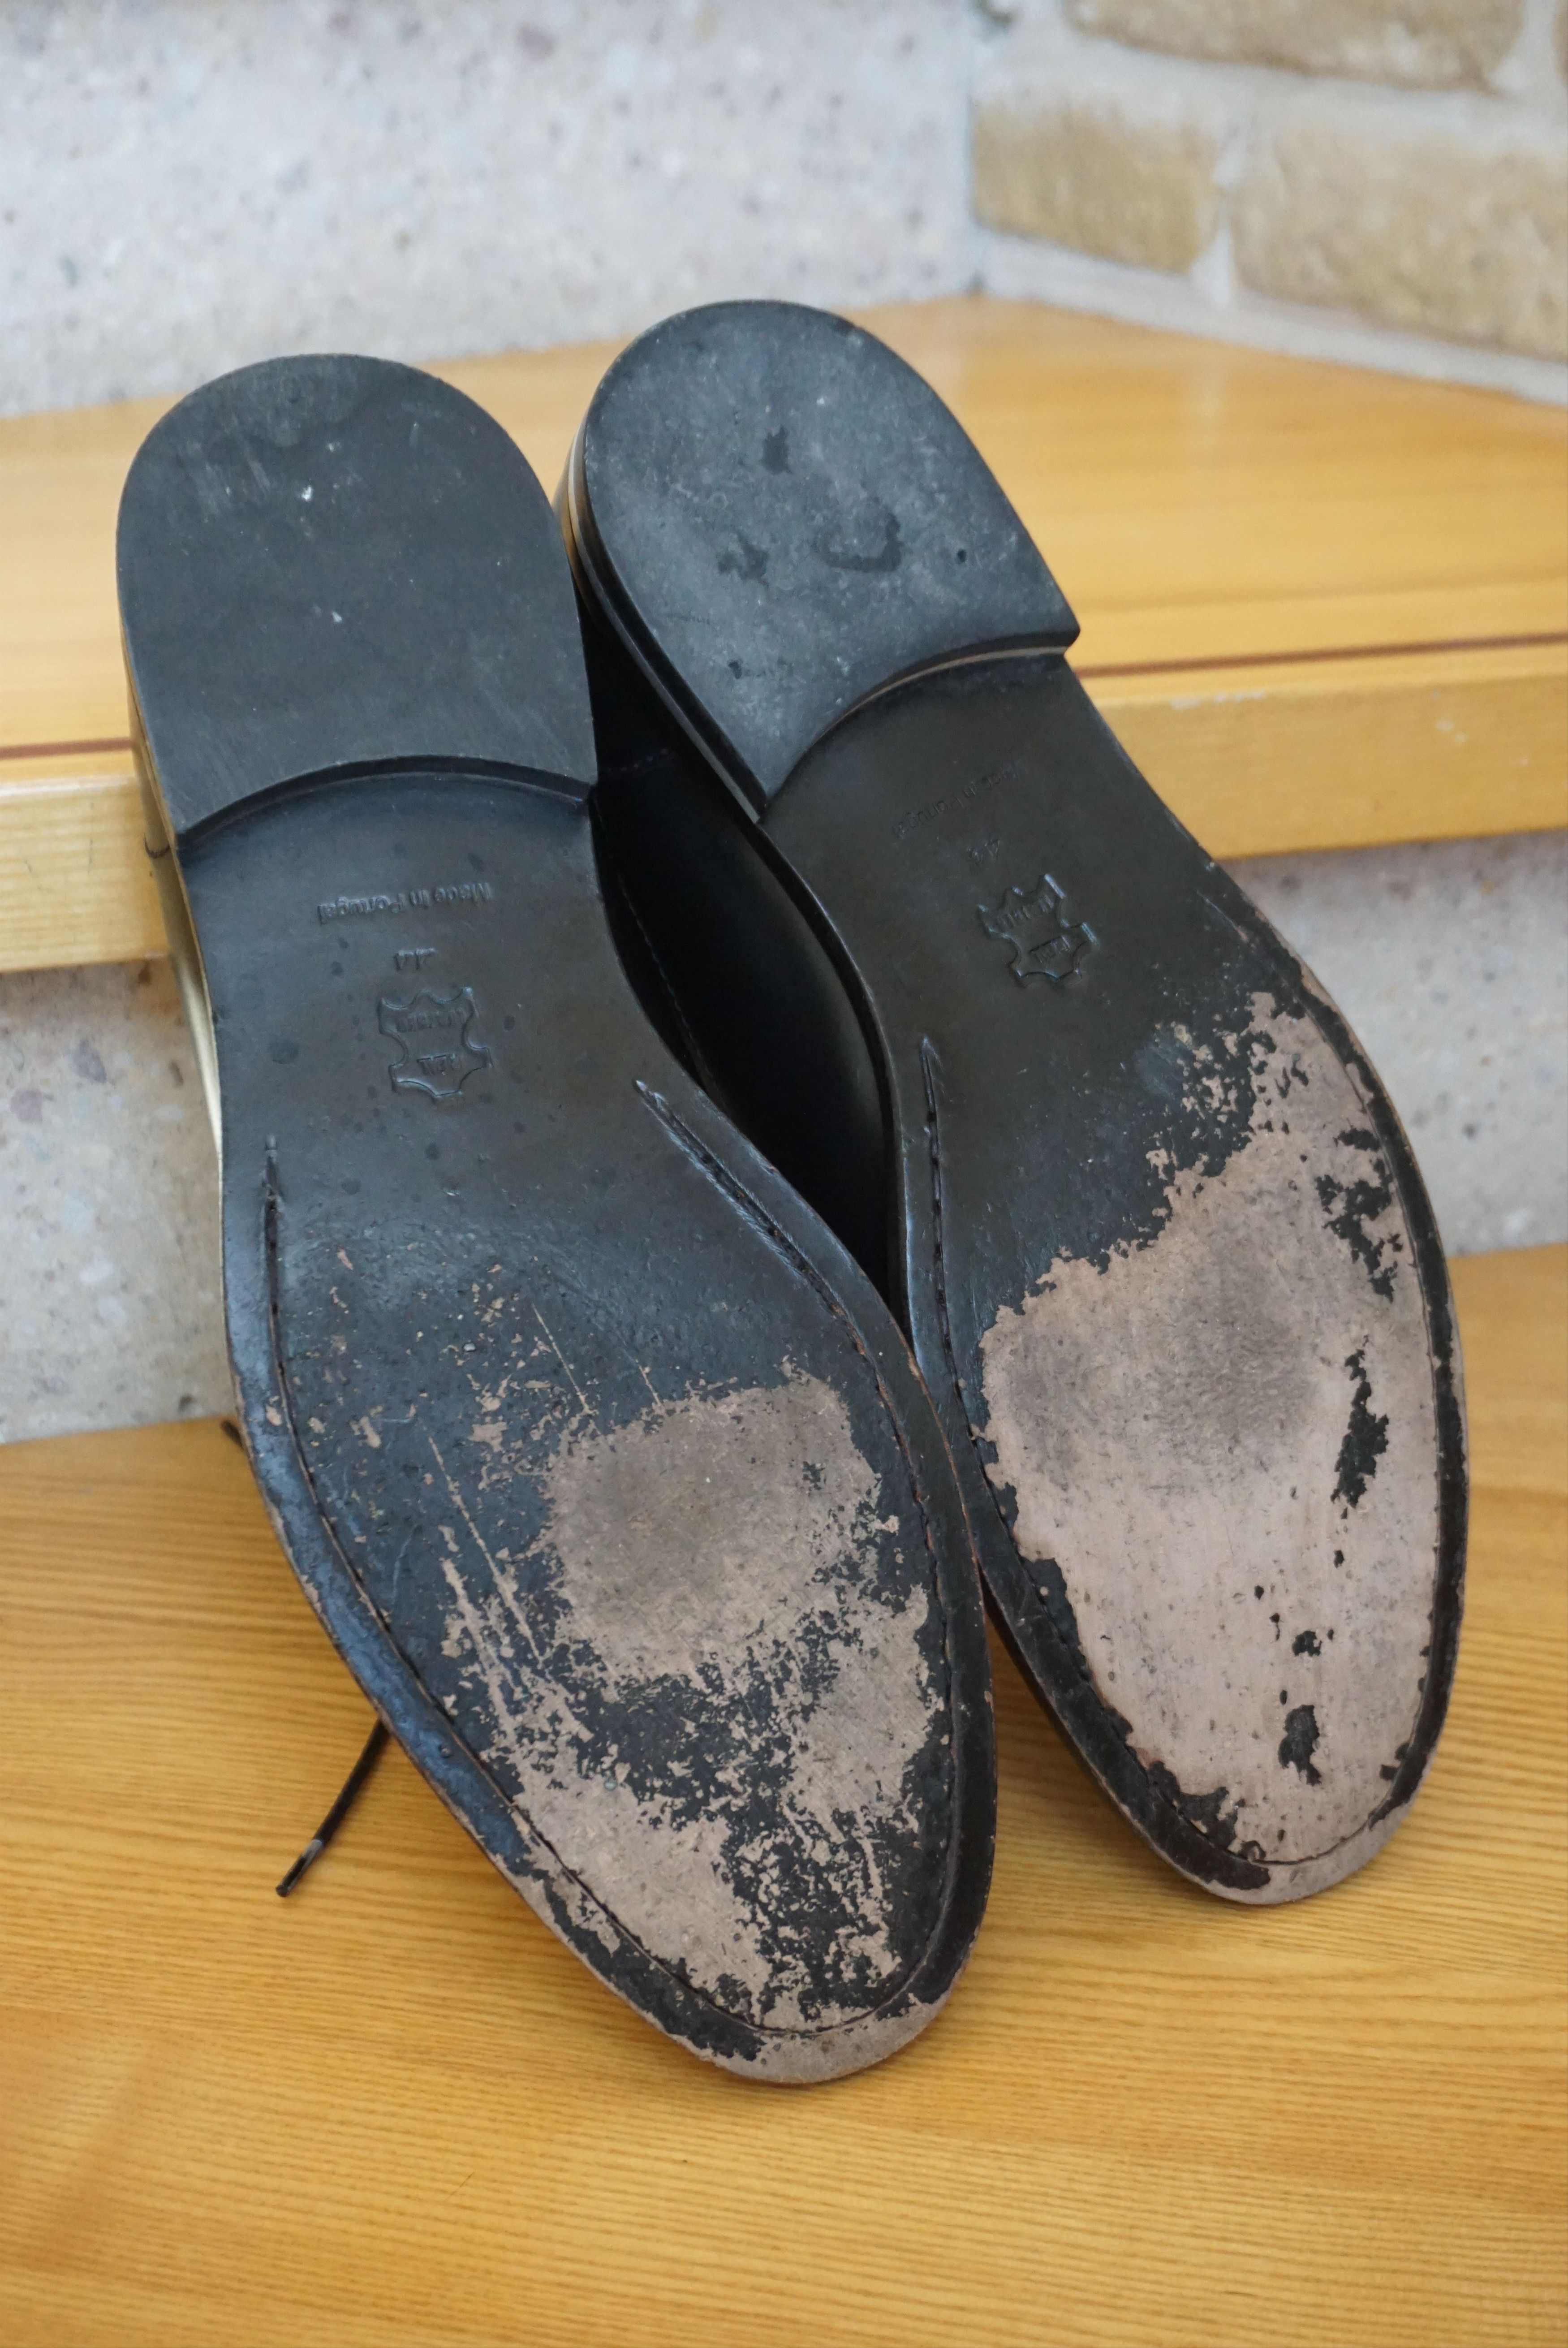 Cos COS RPR$250 leather office shoes EU44 black formal lace up Size US 10.5 / EU 43-44 - 21 Thumbnail